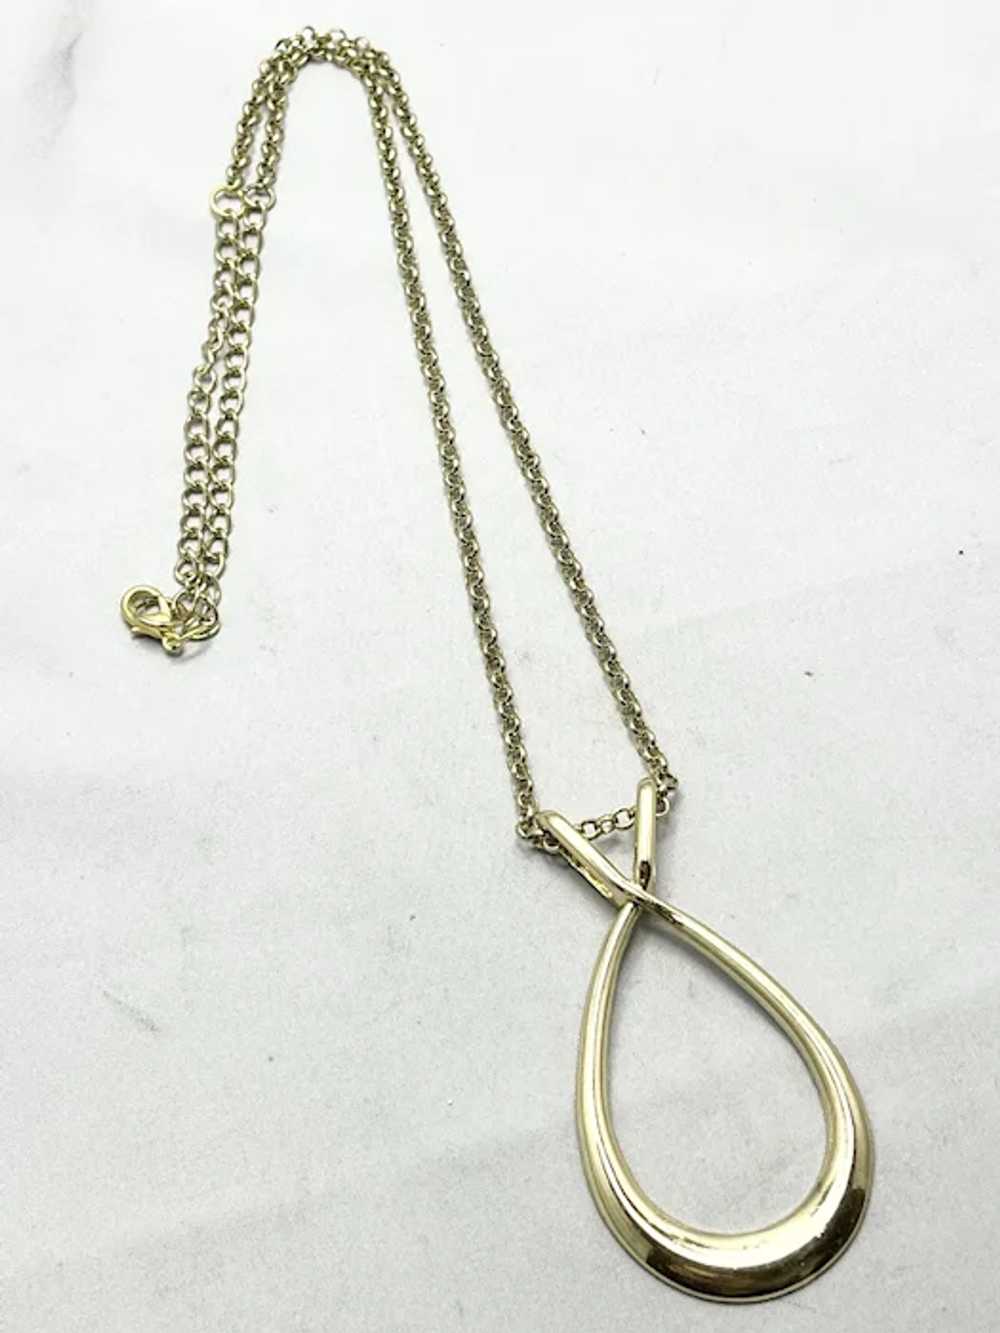 Vintage Gold Tone Large Pendant Necklace - image 2